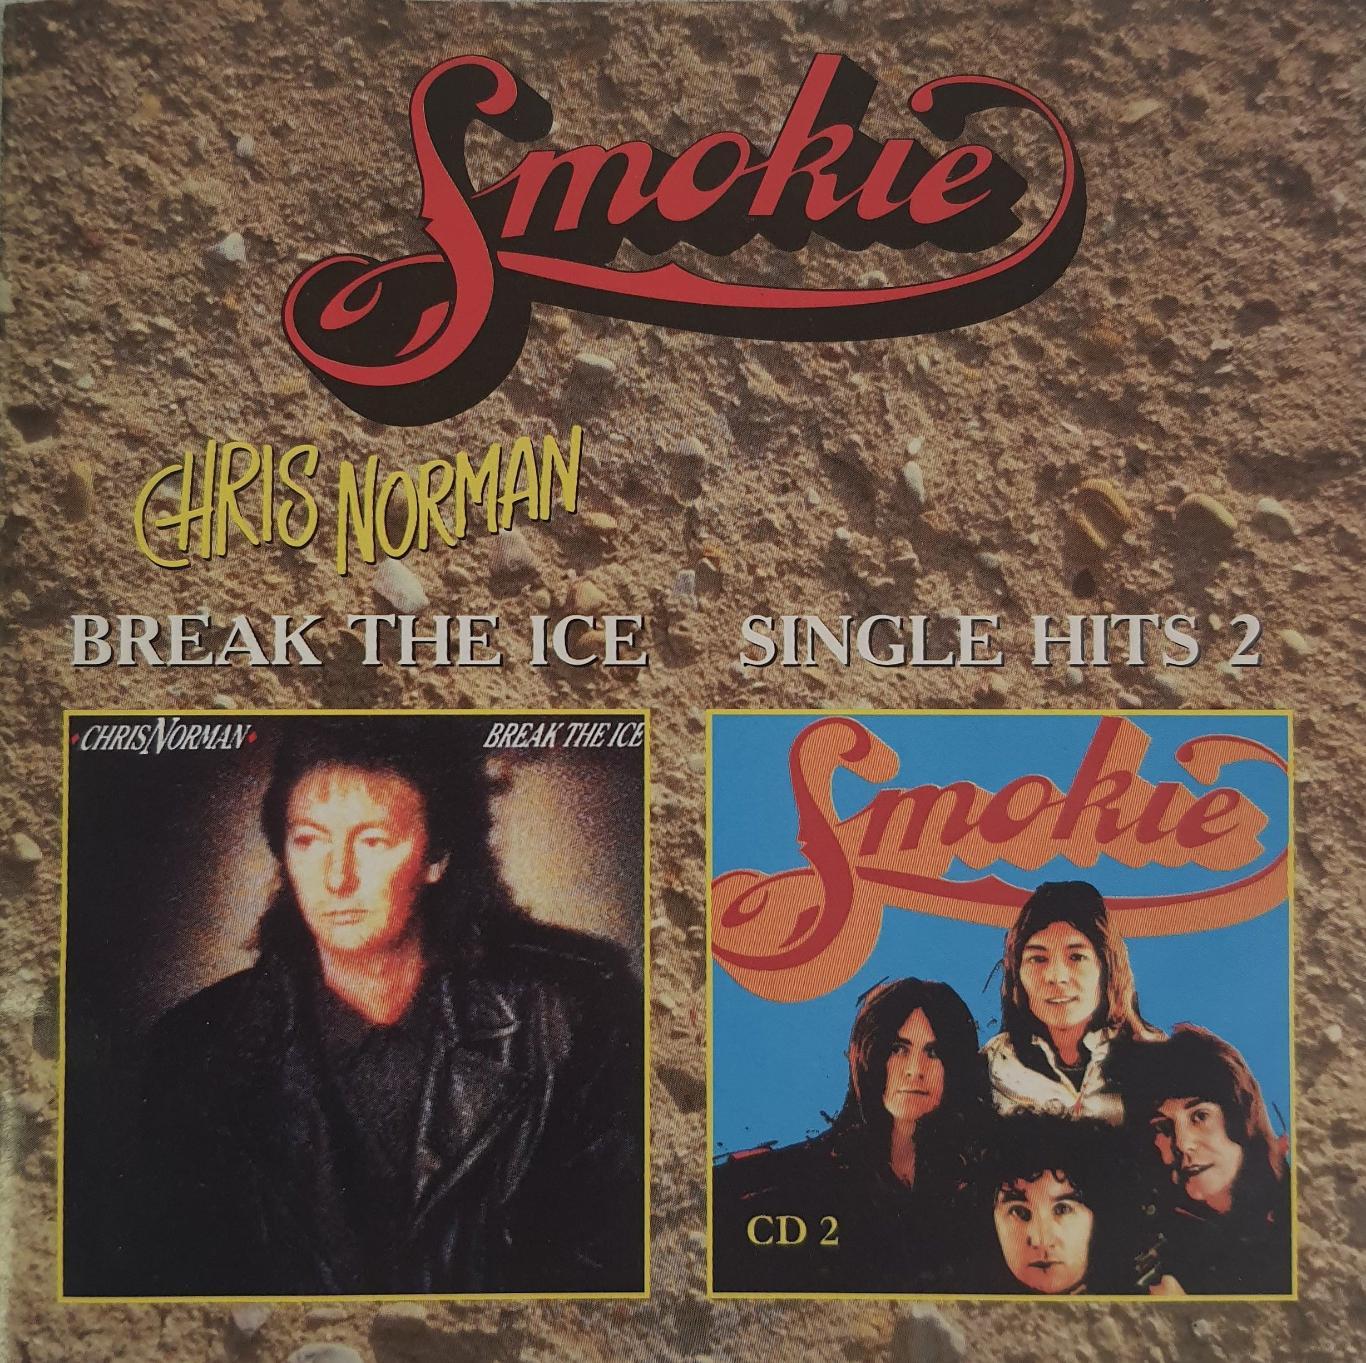 Музыка CD Chris NORMAN - Break the Ice 1989 / Smokie - Single Hits 2 1978